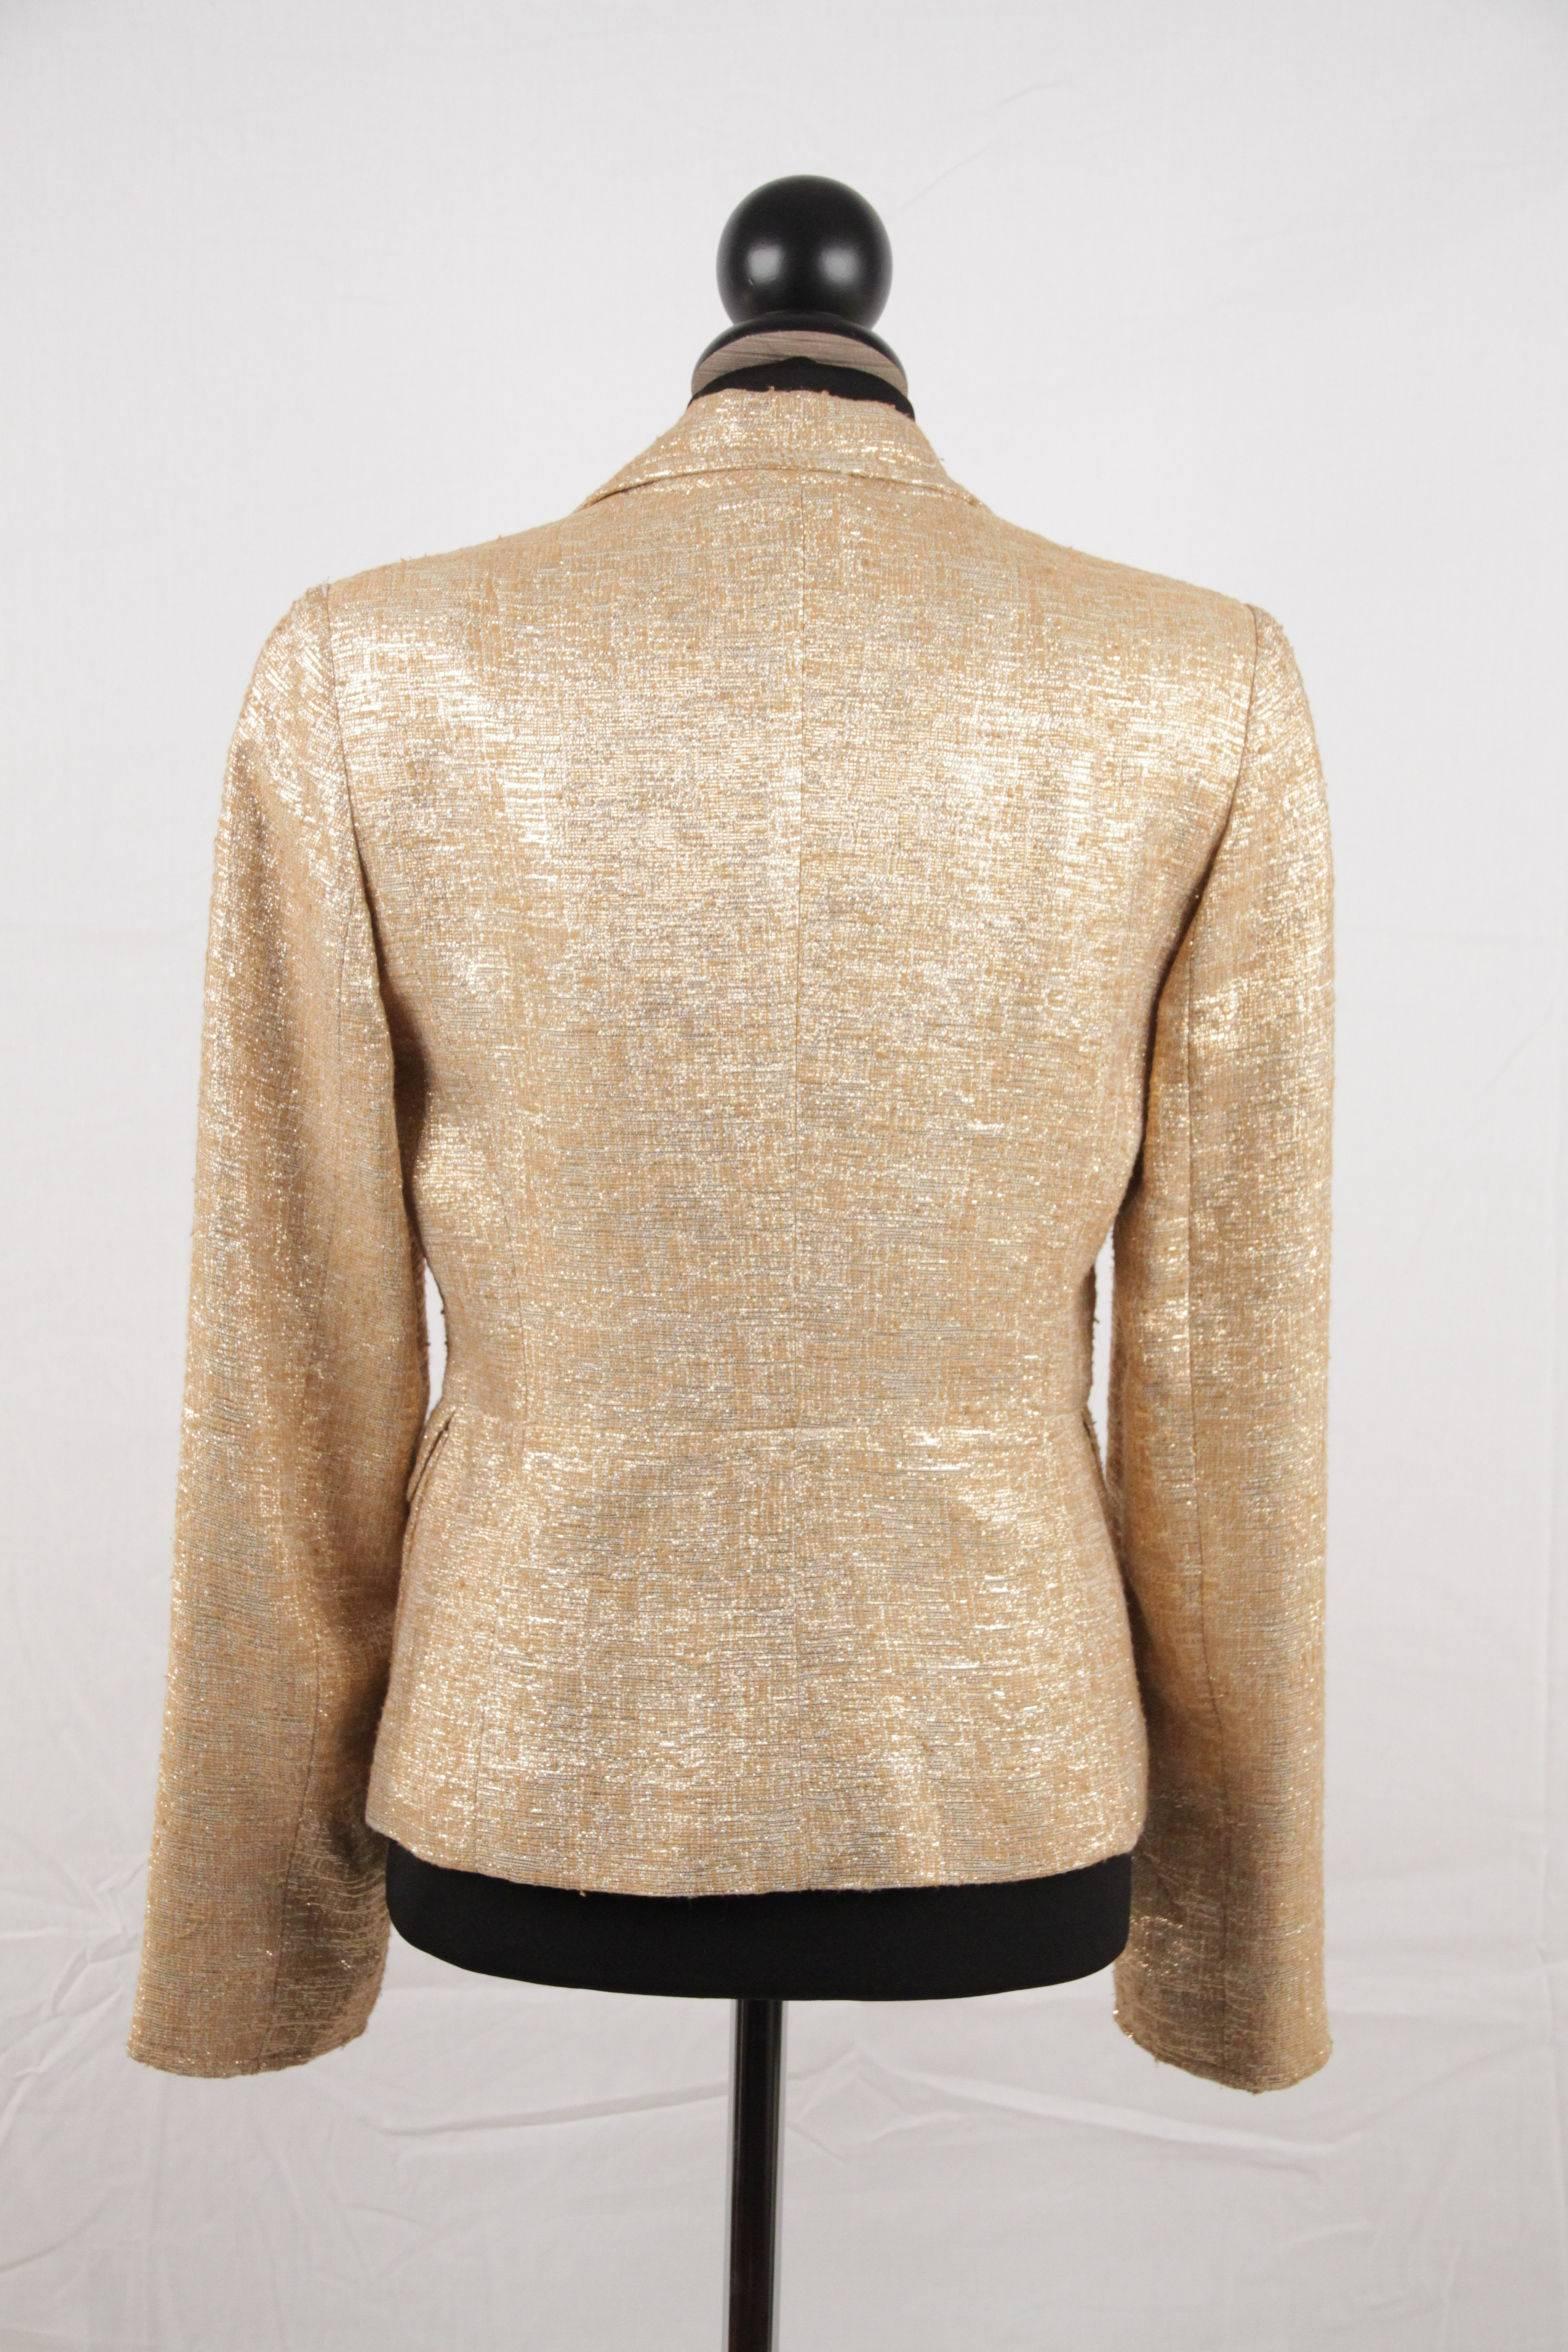 Women's DOLCE & GABBANA Gold Tone METALLIC Woven Fabric BLAZER Jacket SIZE 42